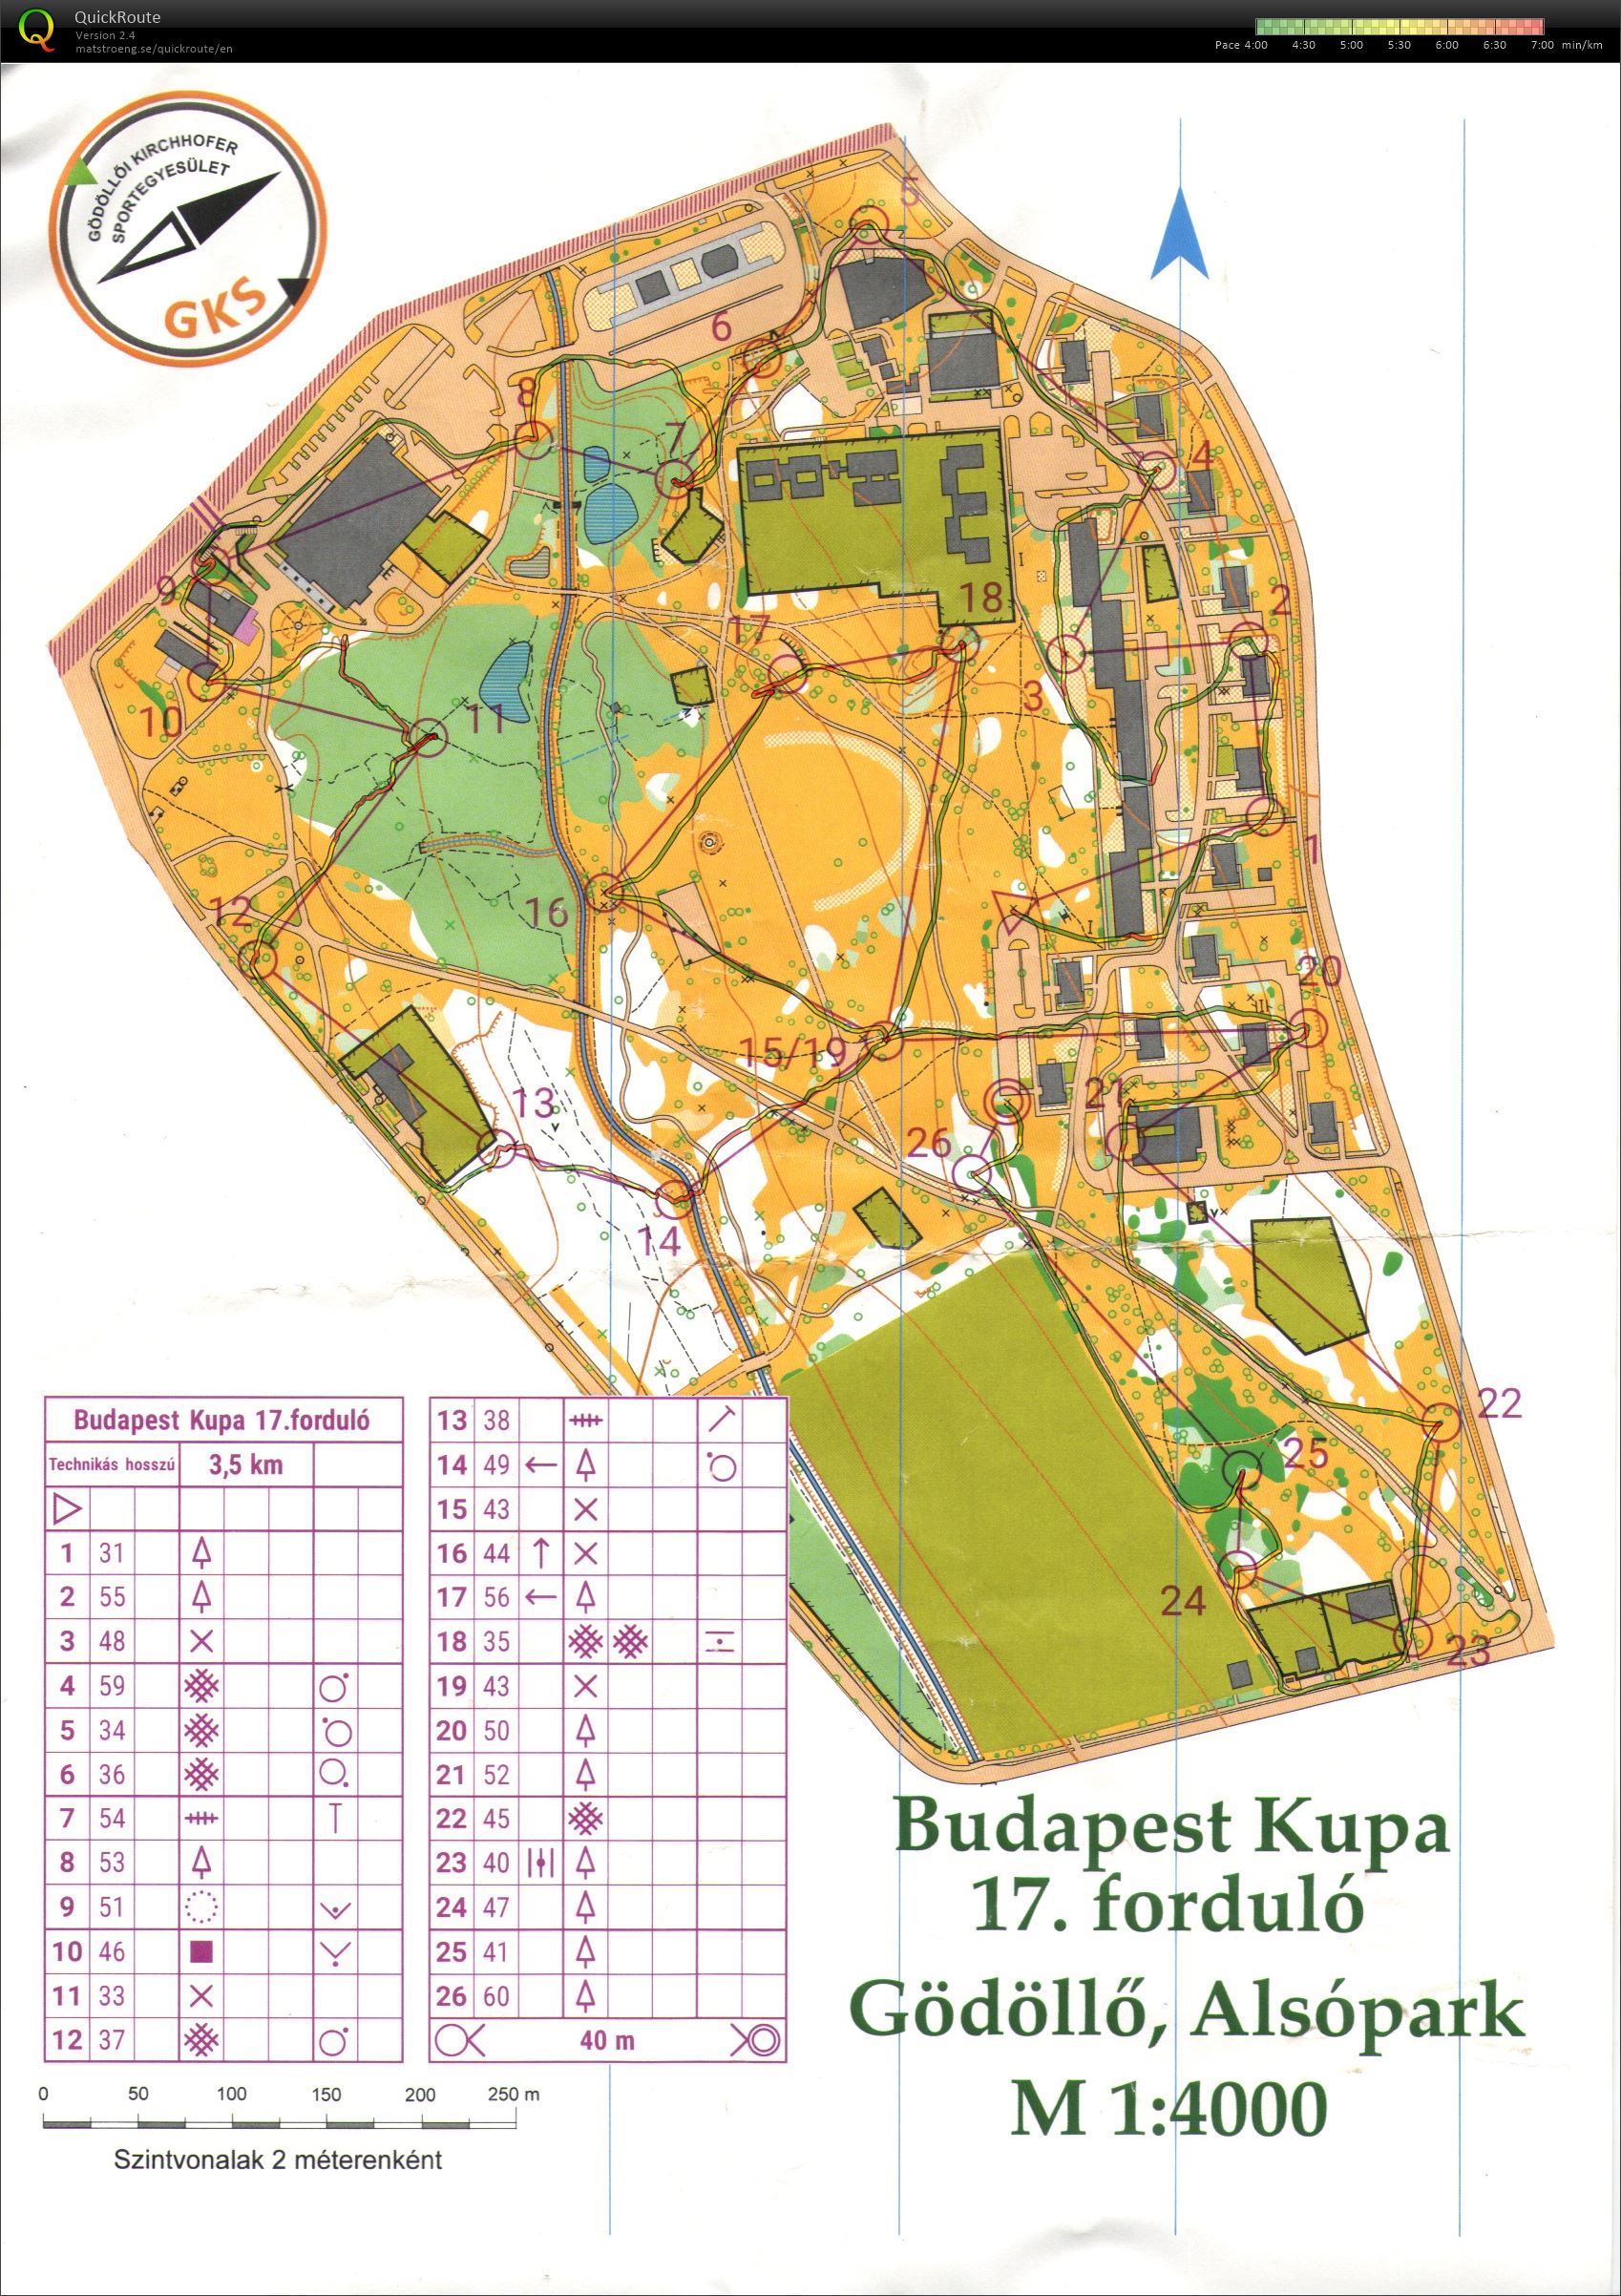 Budapest Kupa 17. forduló (16.06.2021)